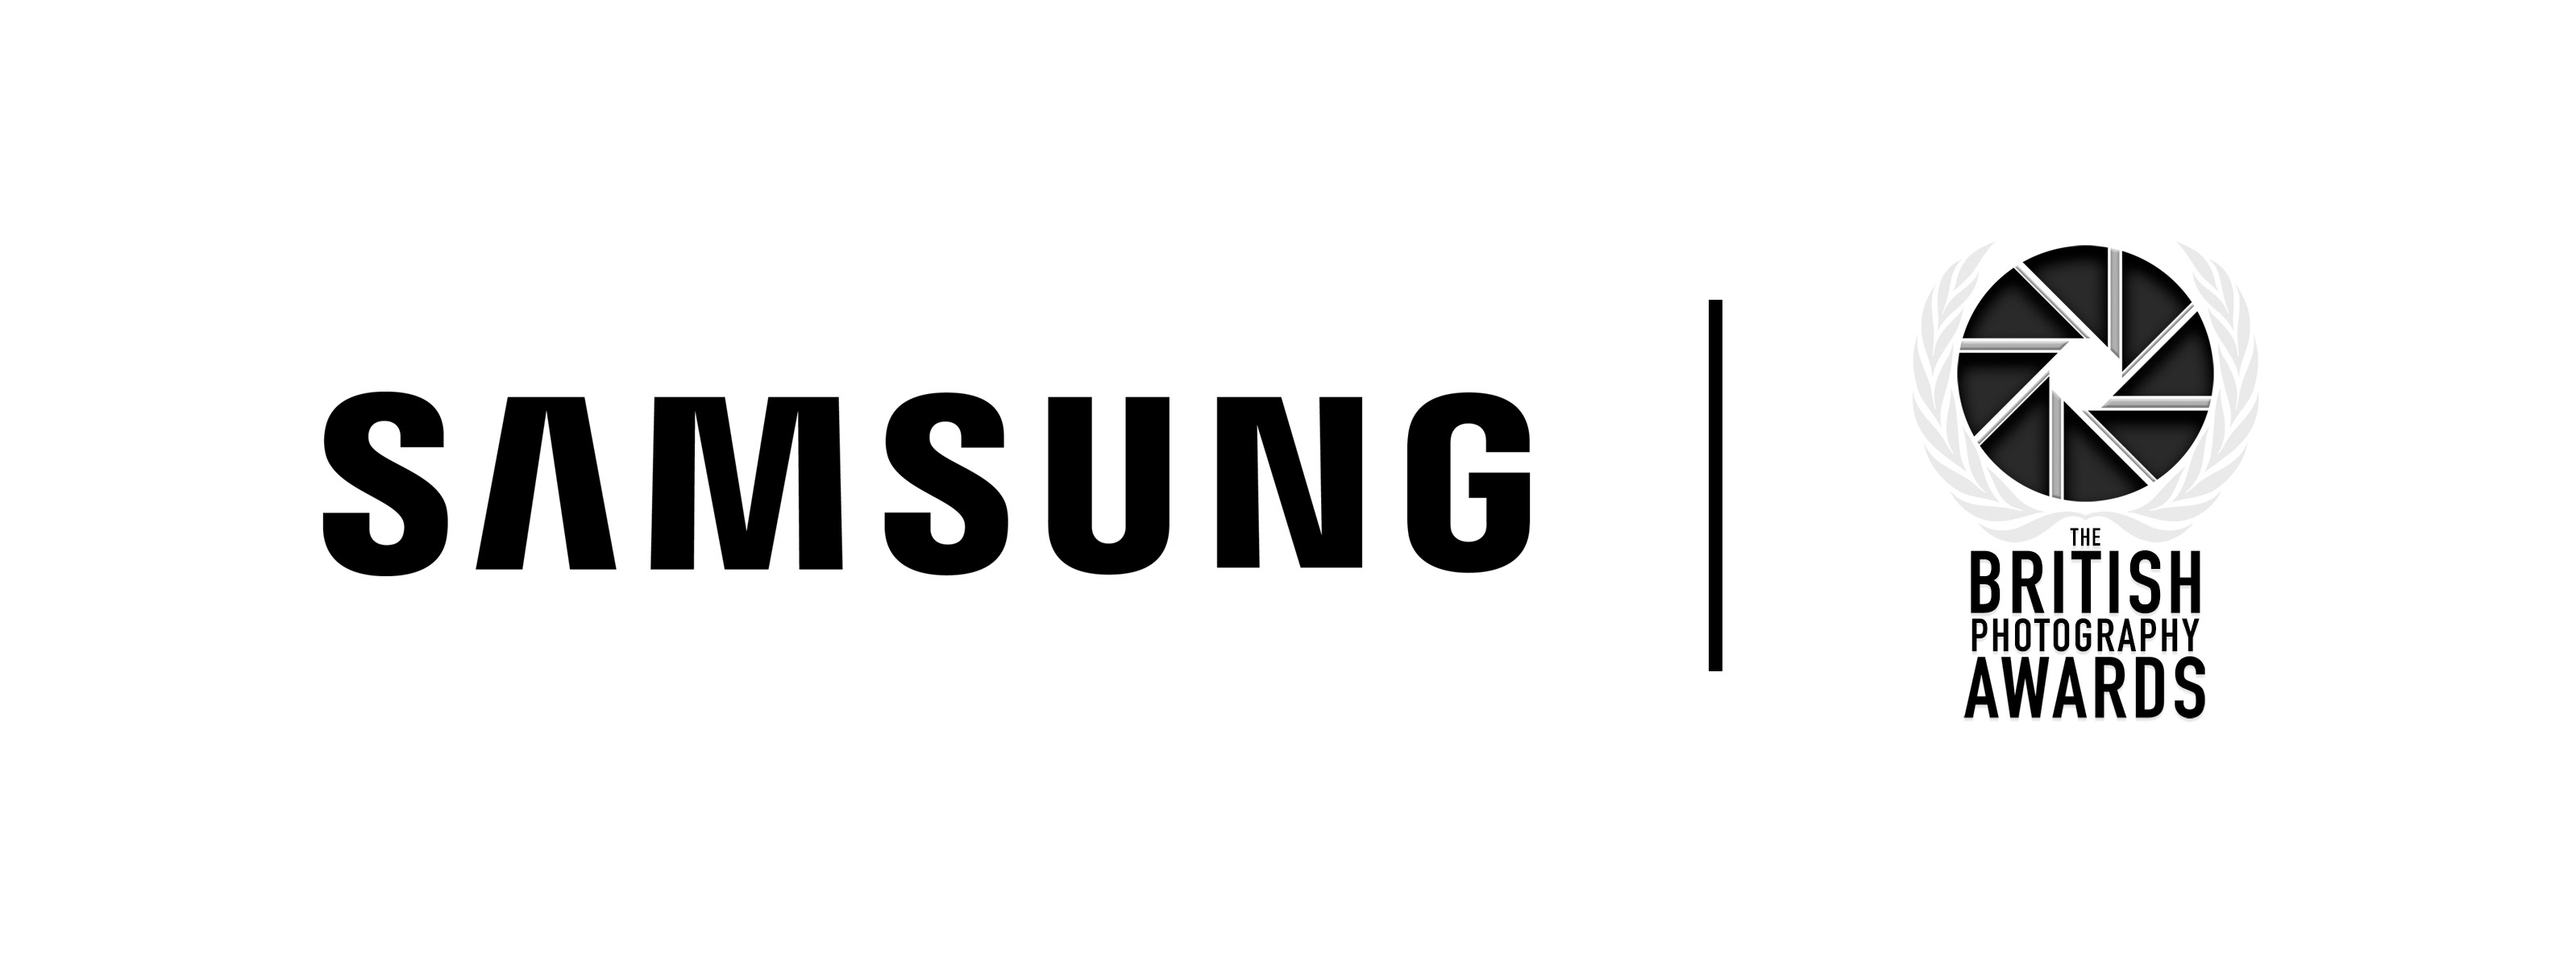 Samsung Logos